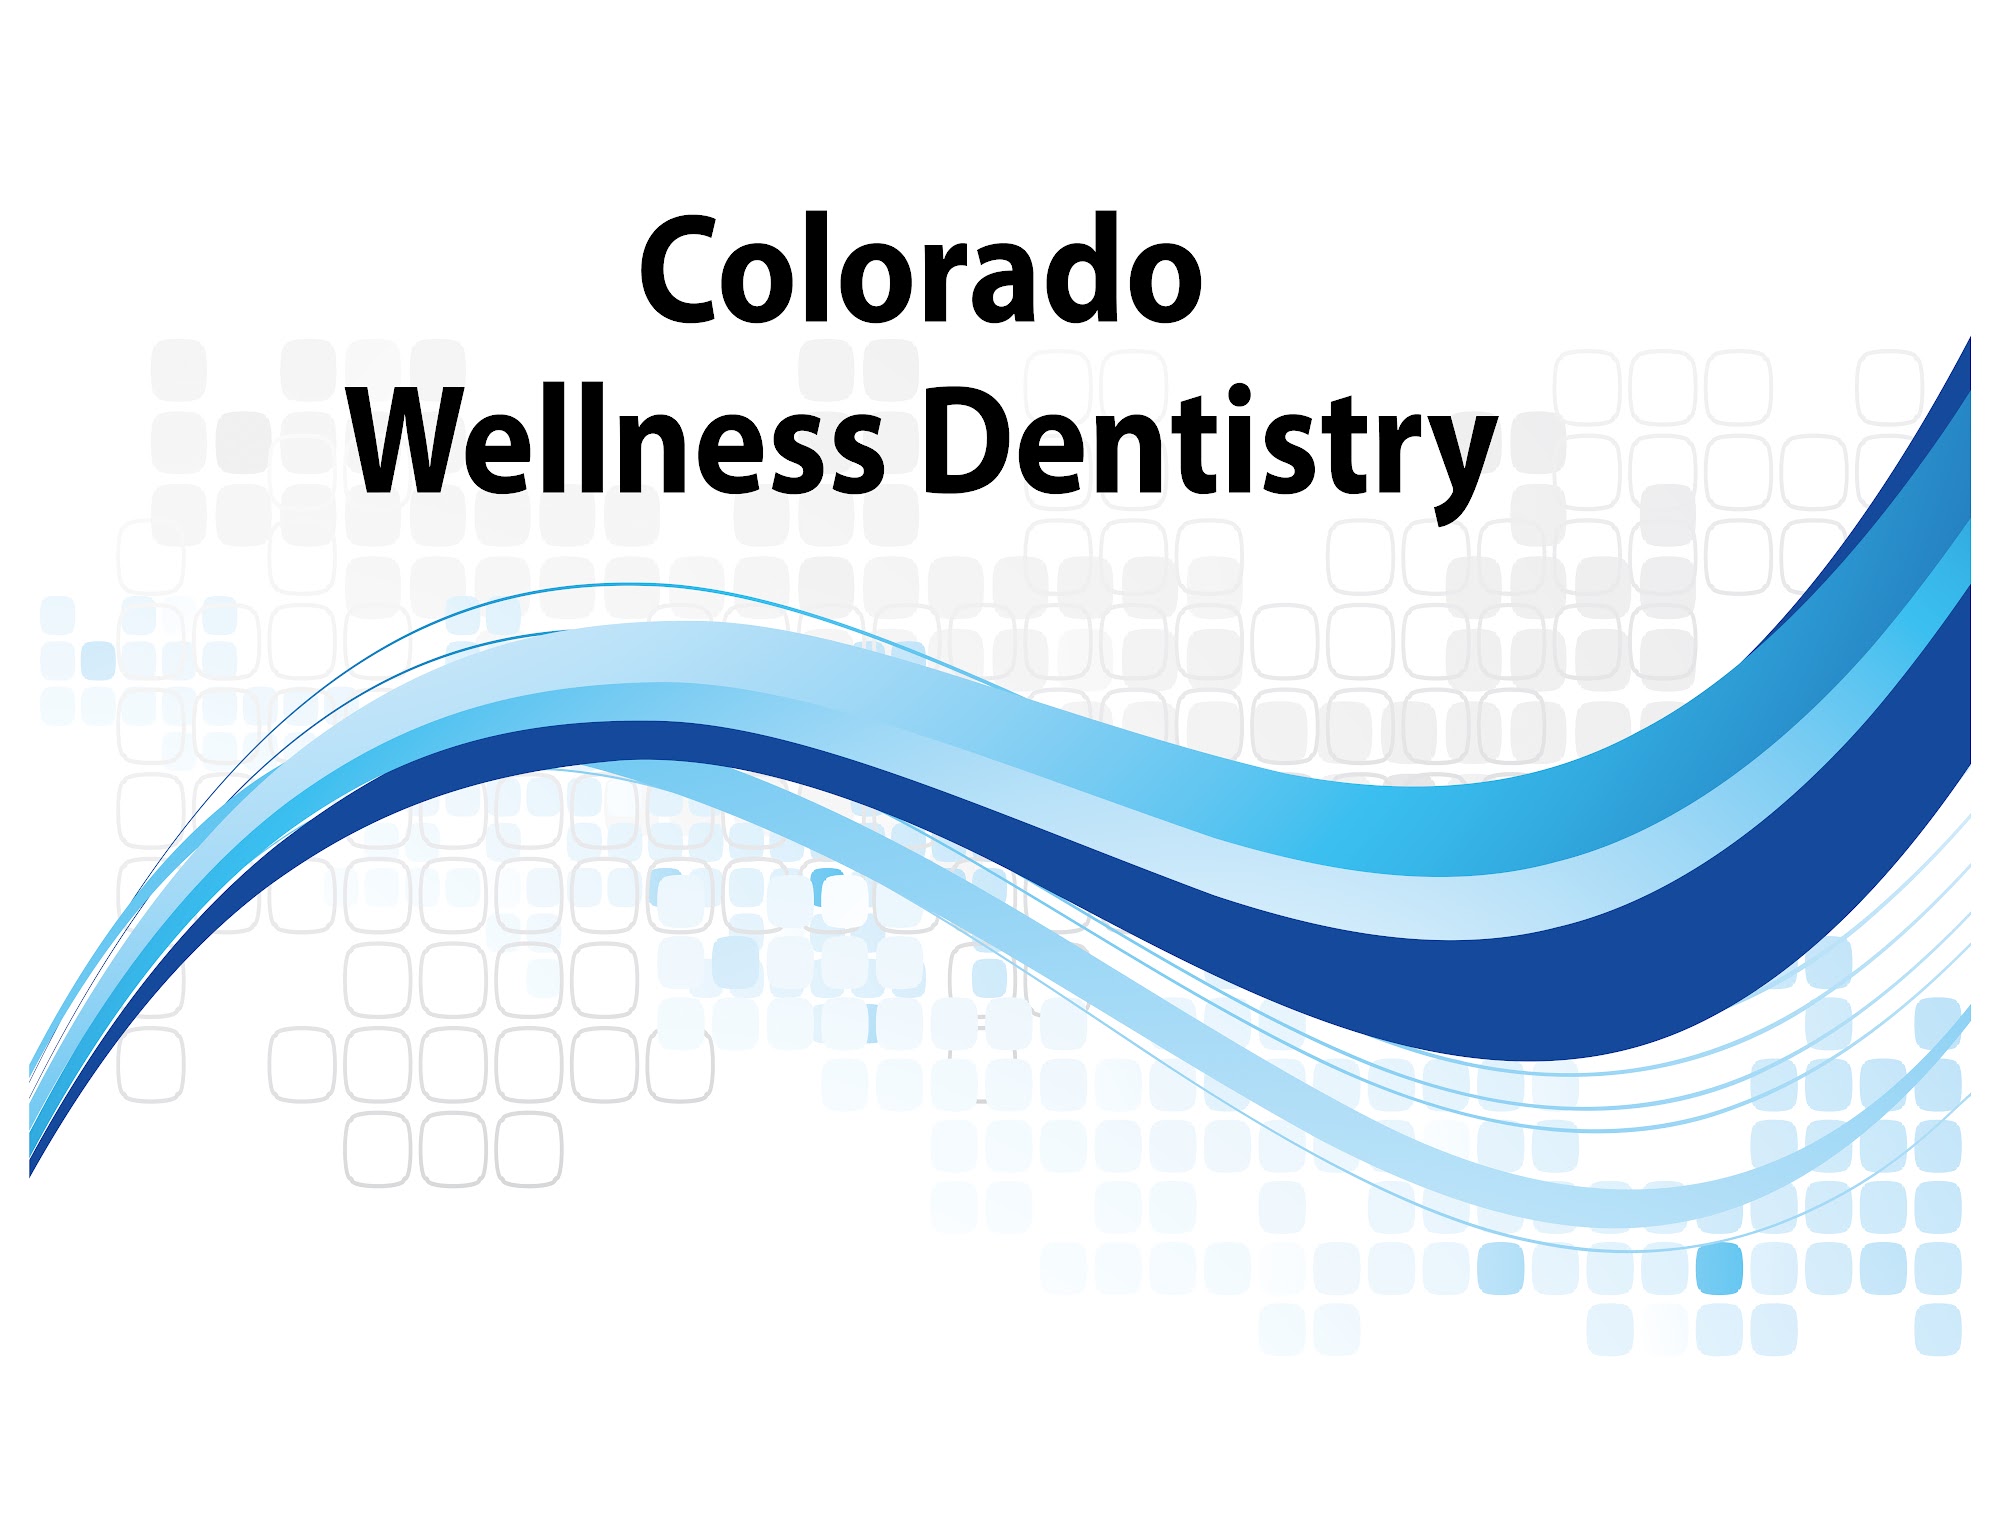 Colorado Wellness Dentistry